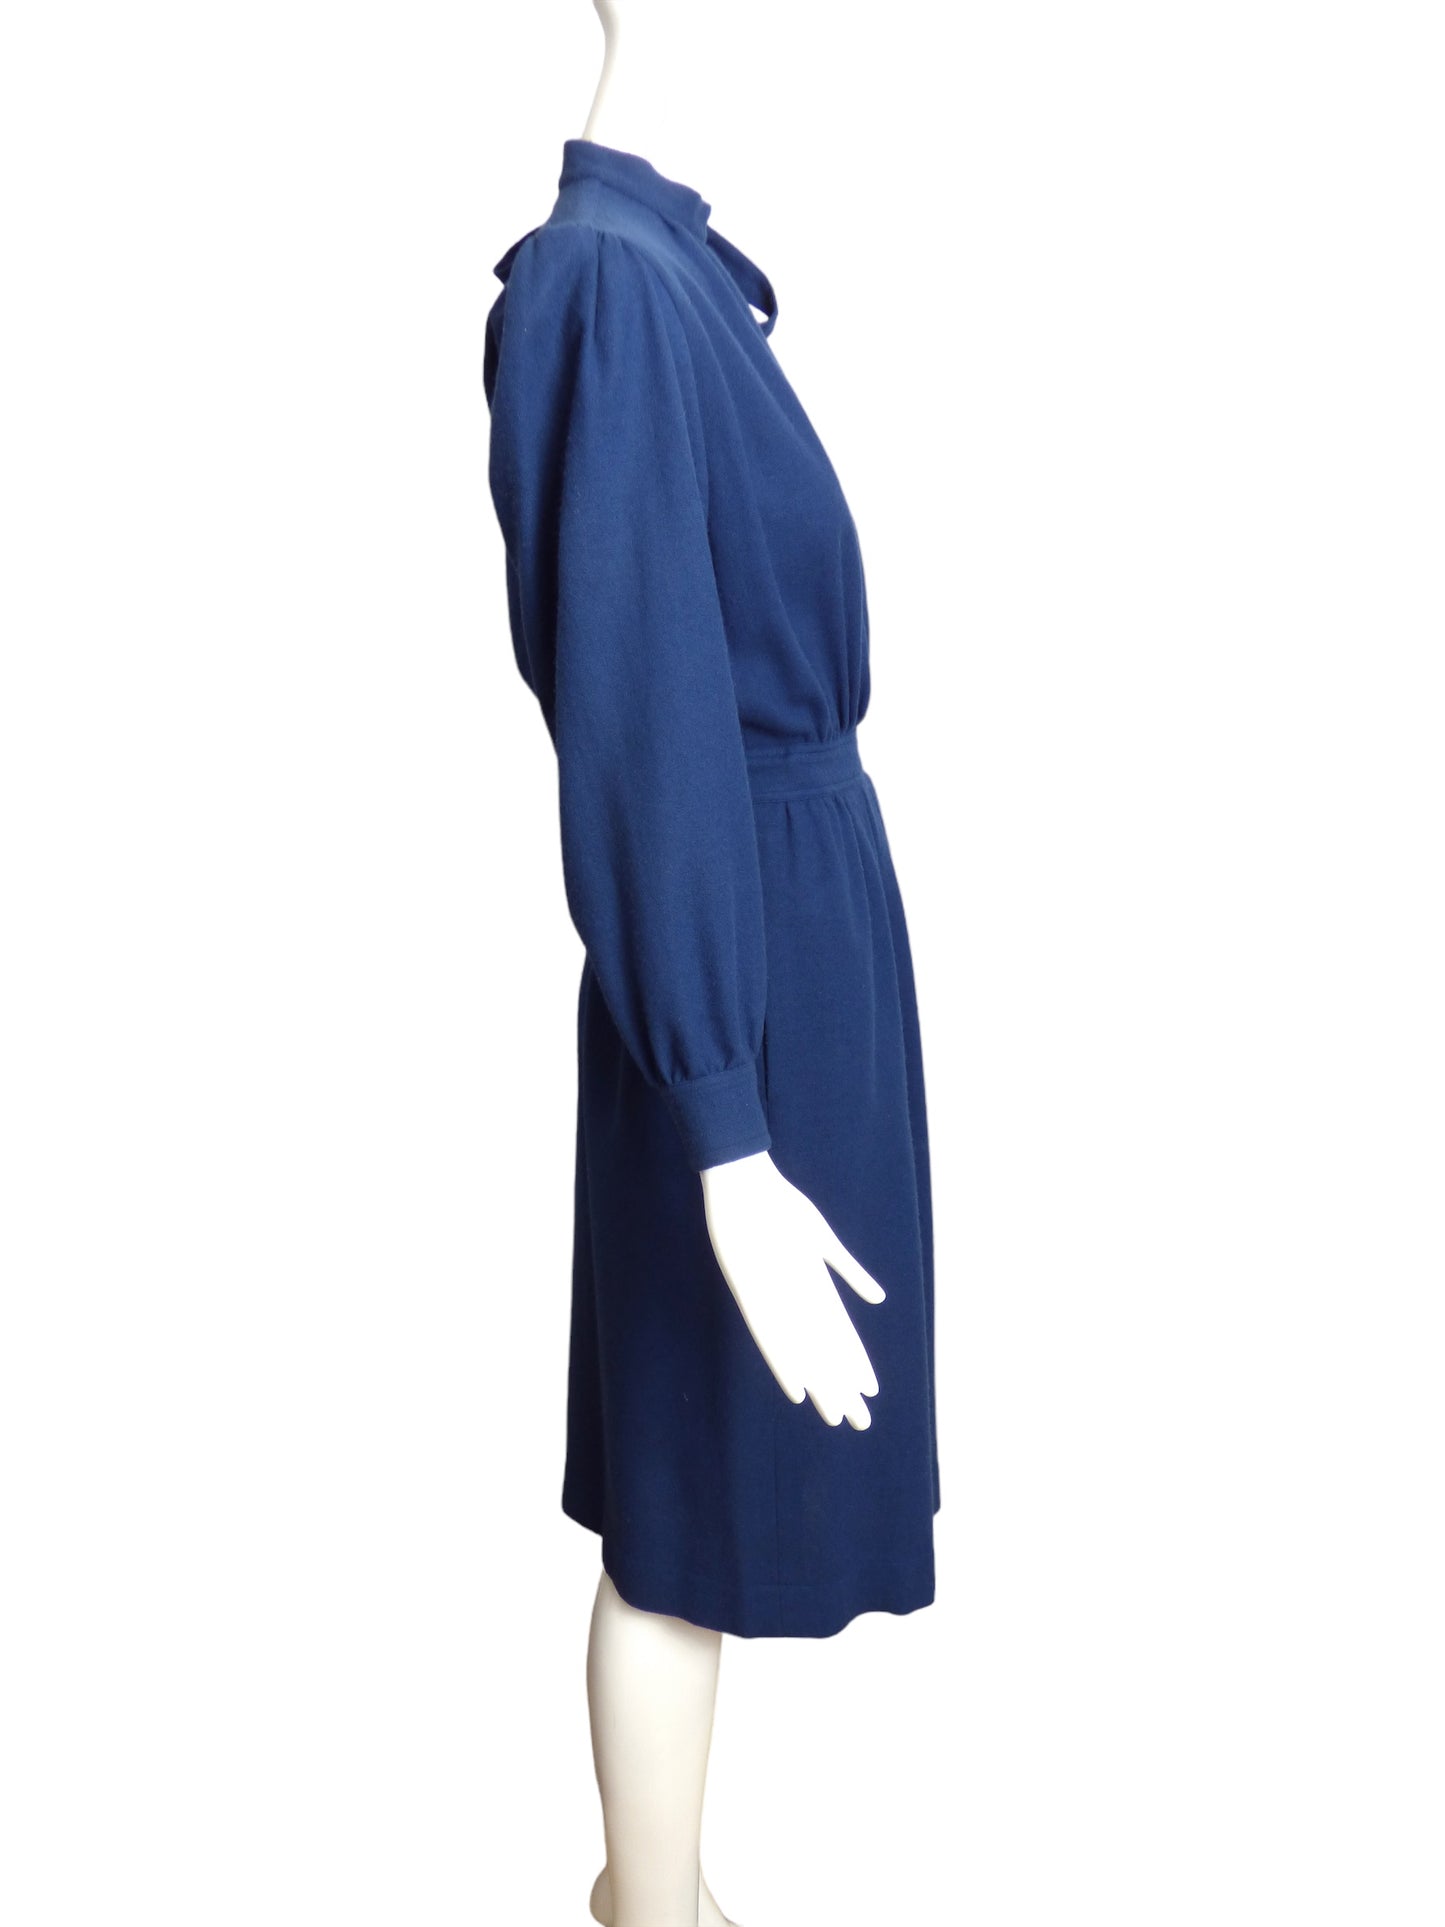 YVES SAINT LAURENT- 1970s Blue Wool Flannel Dress, Size 4